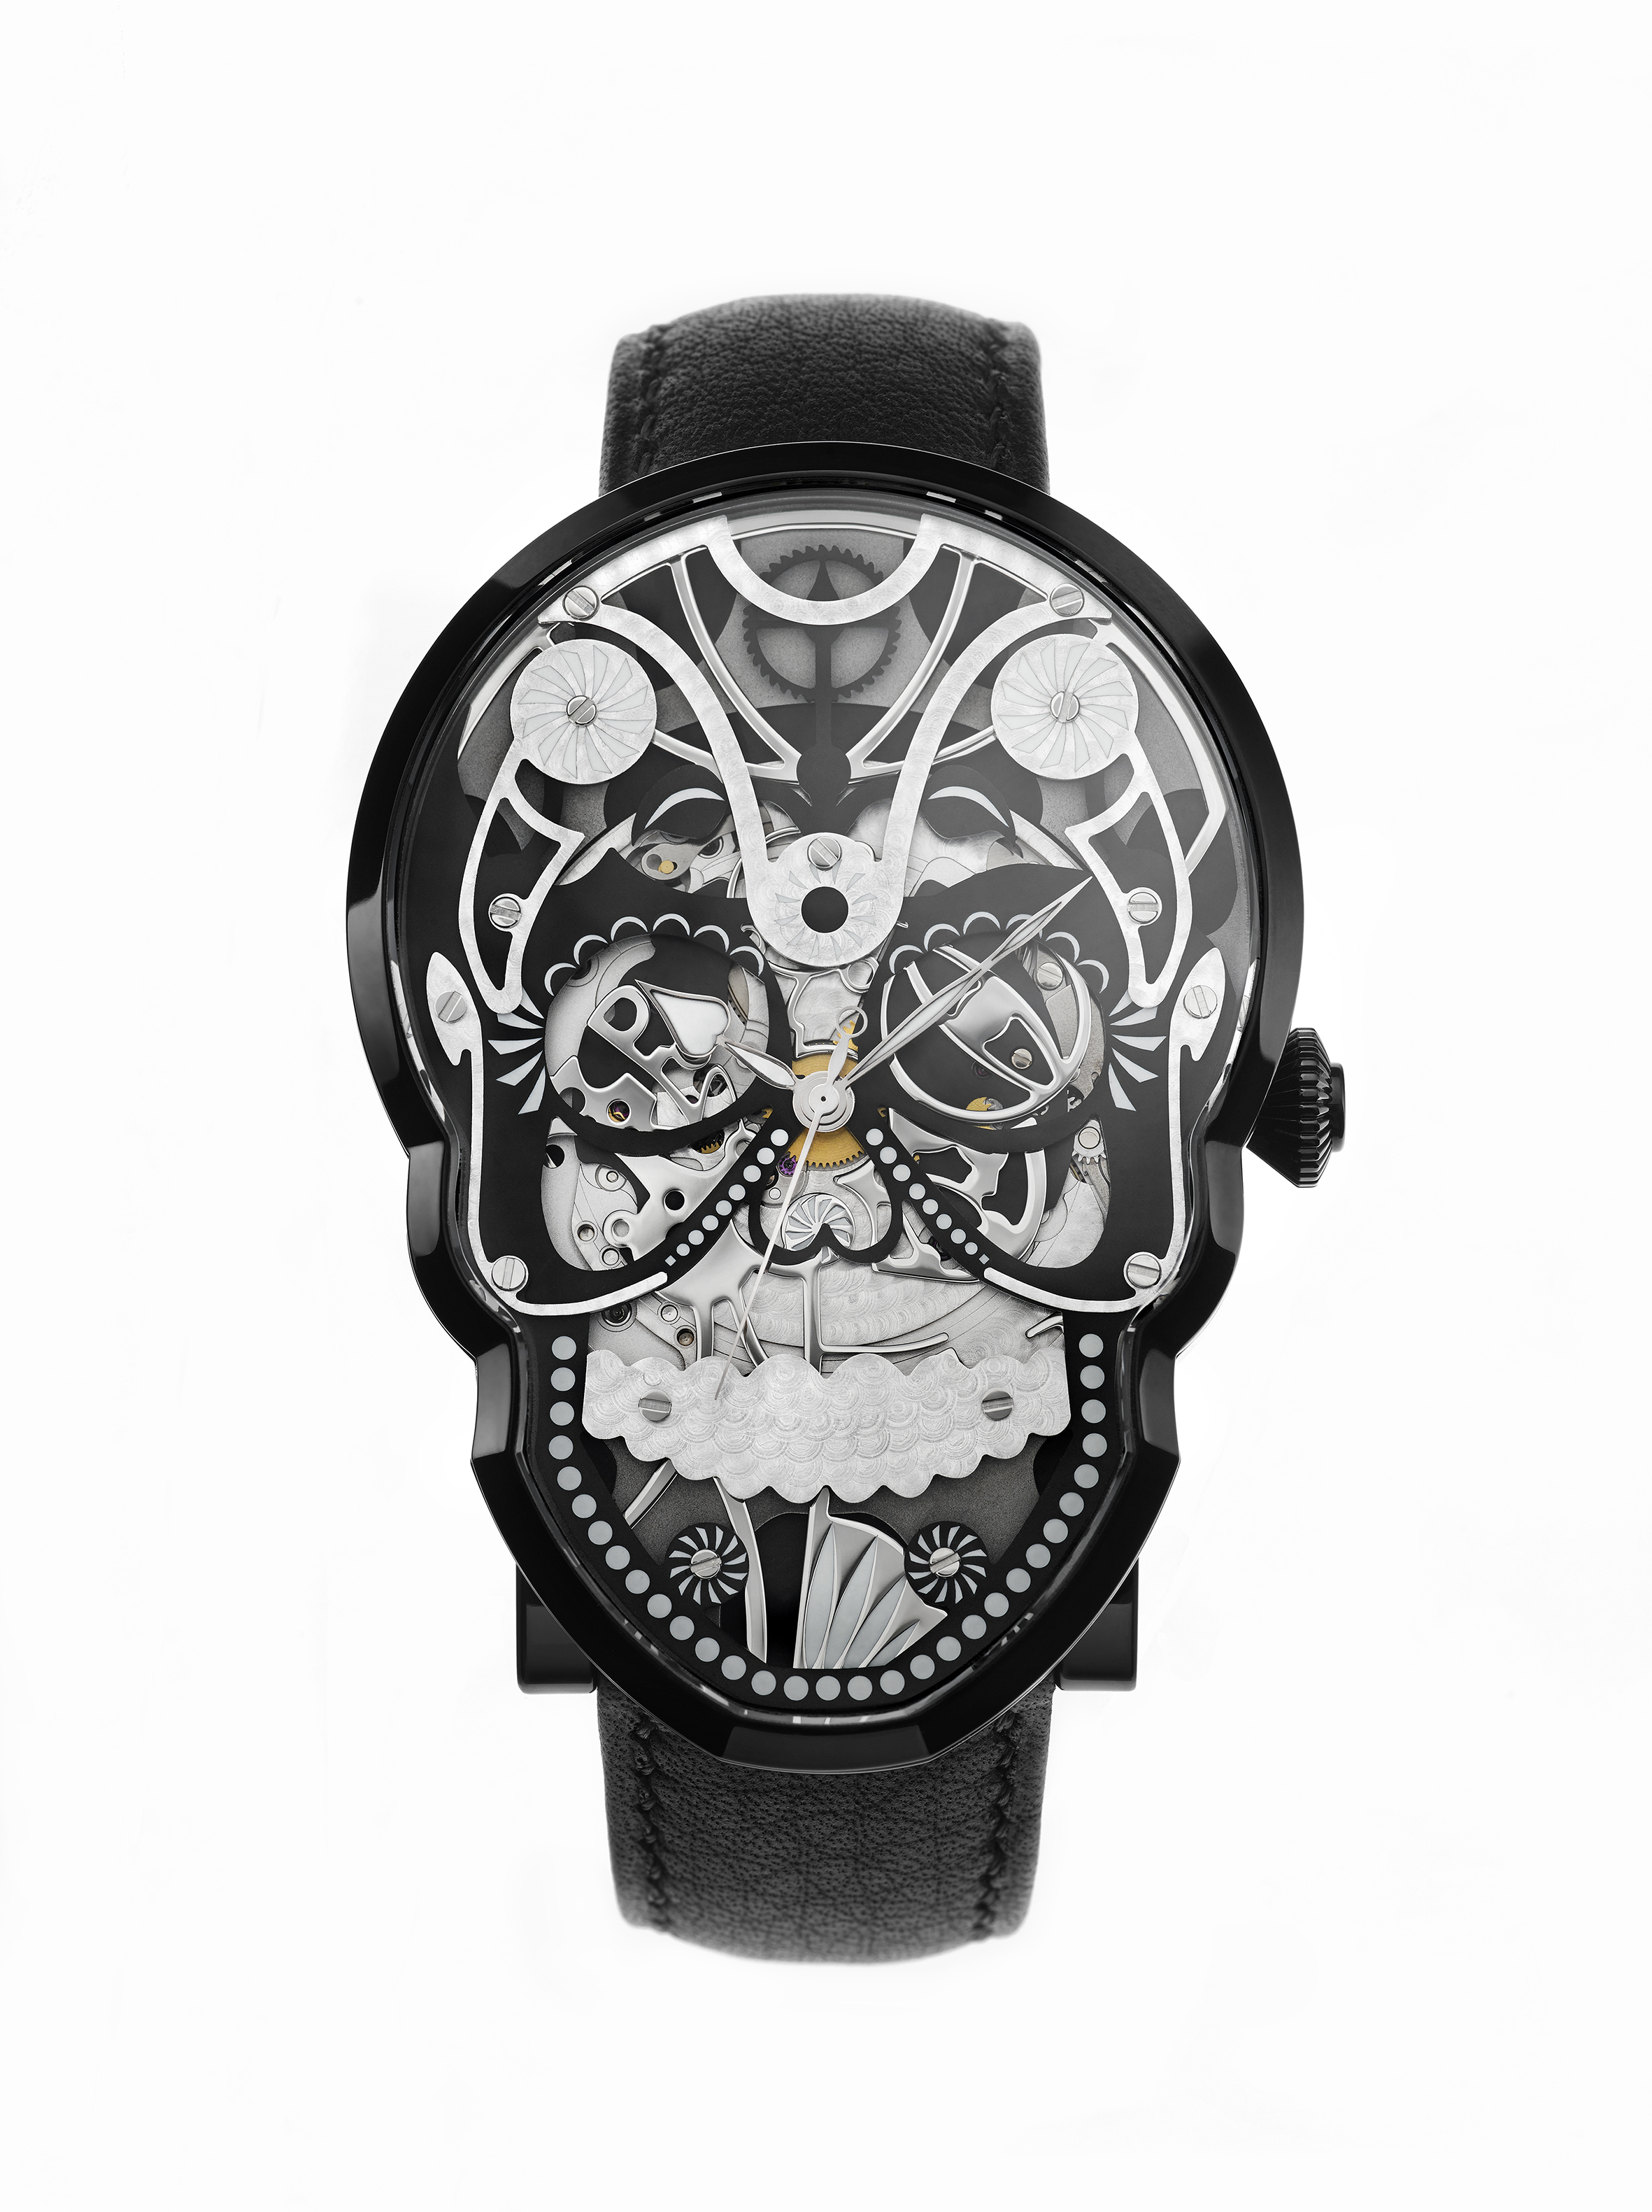 A signature skull watch. 